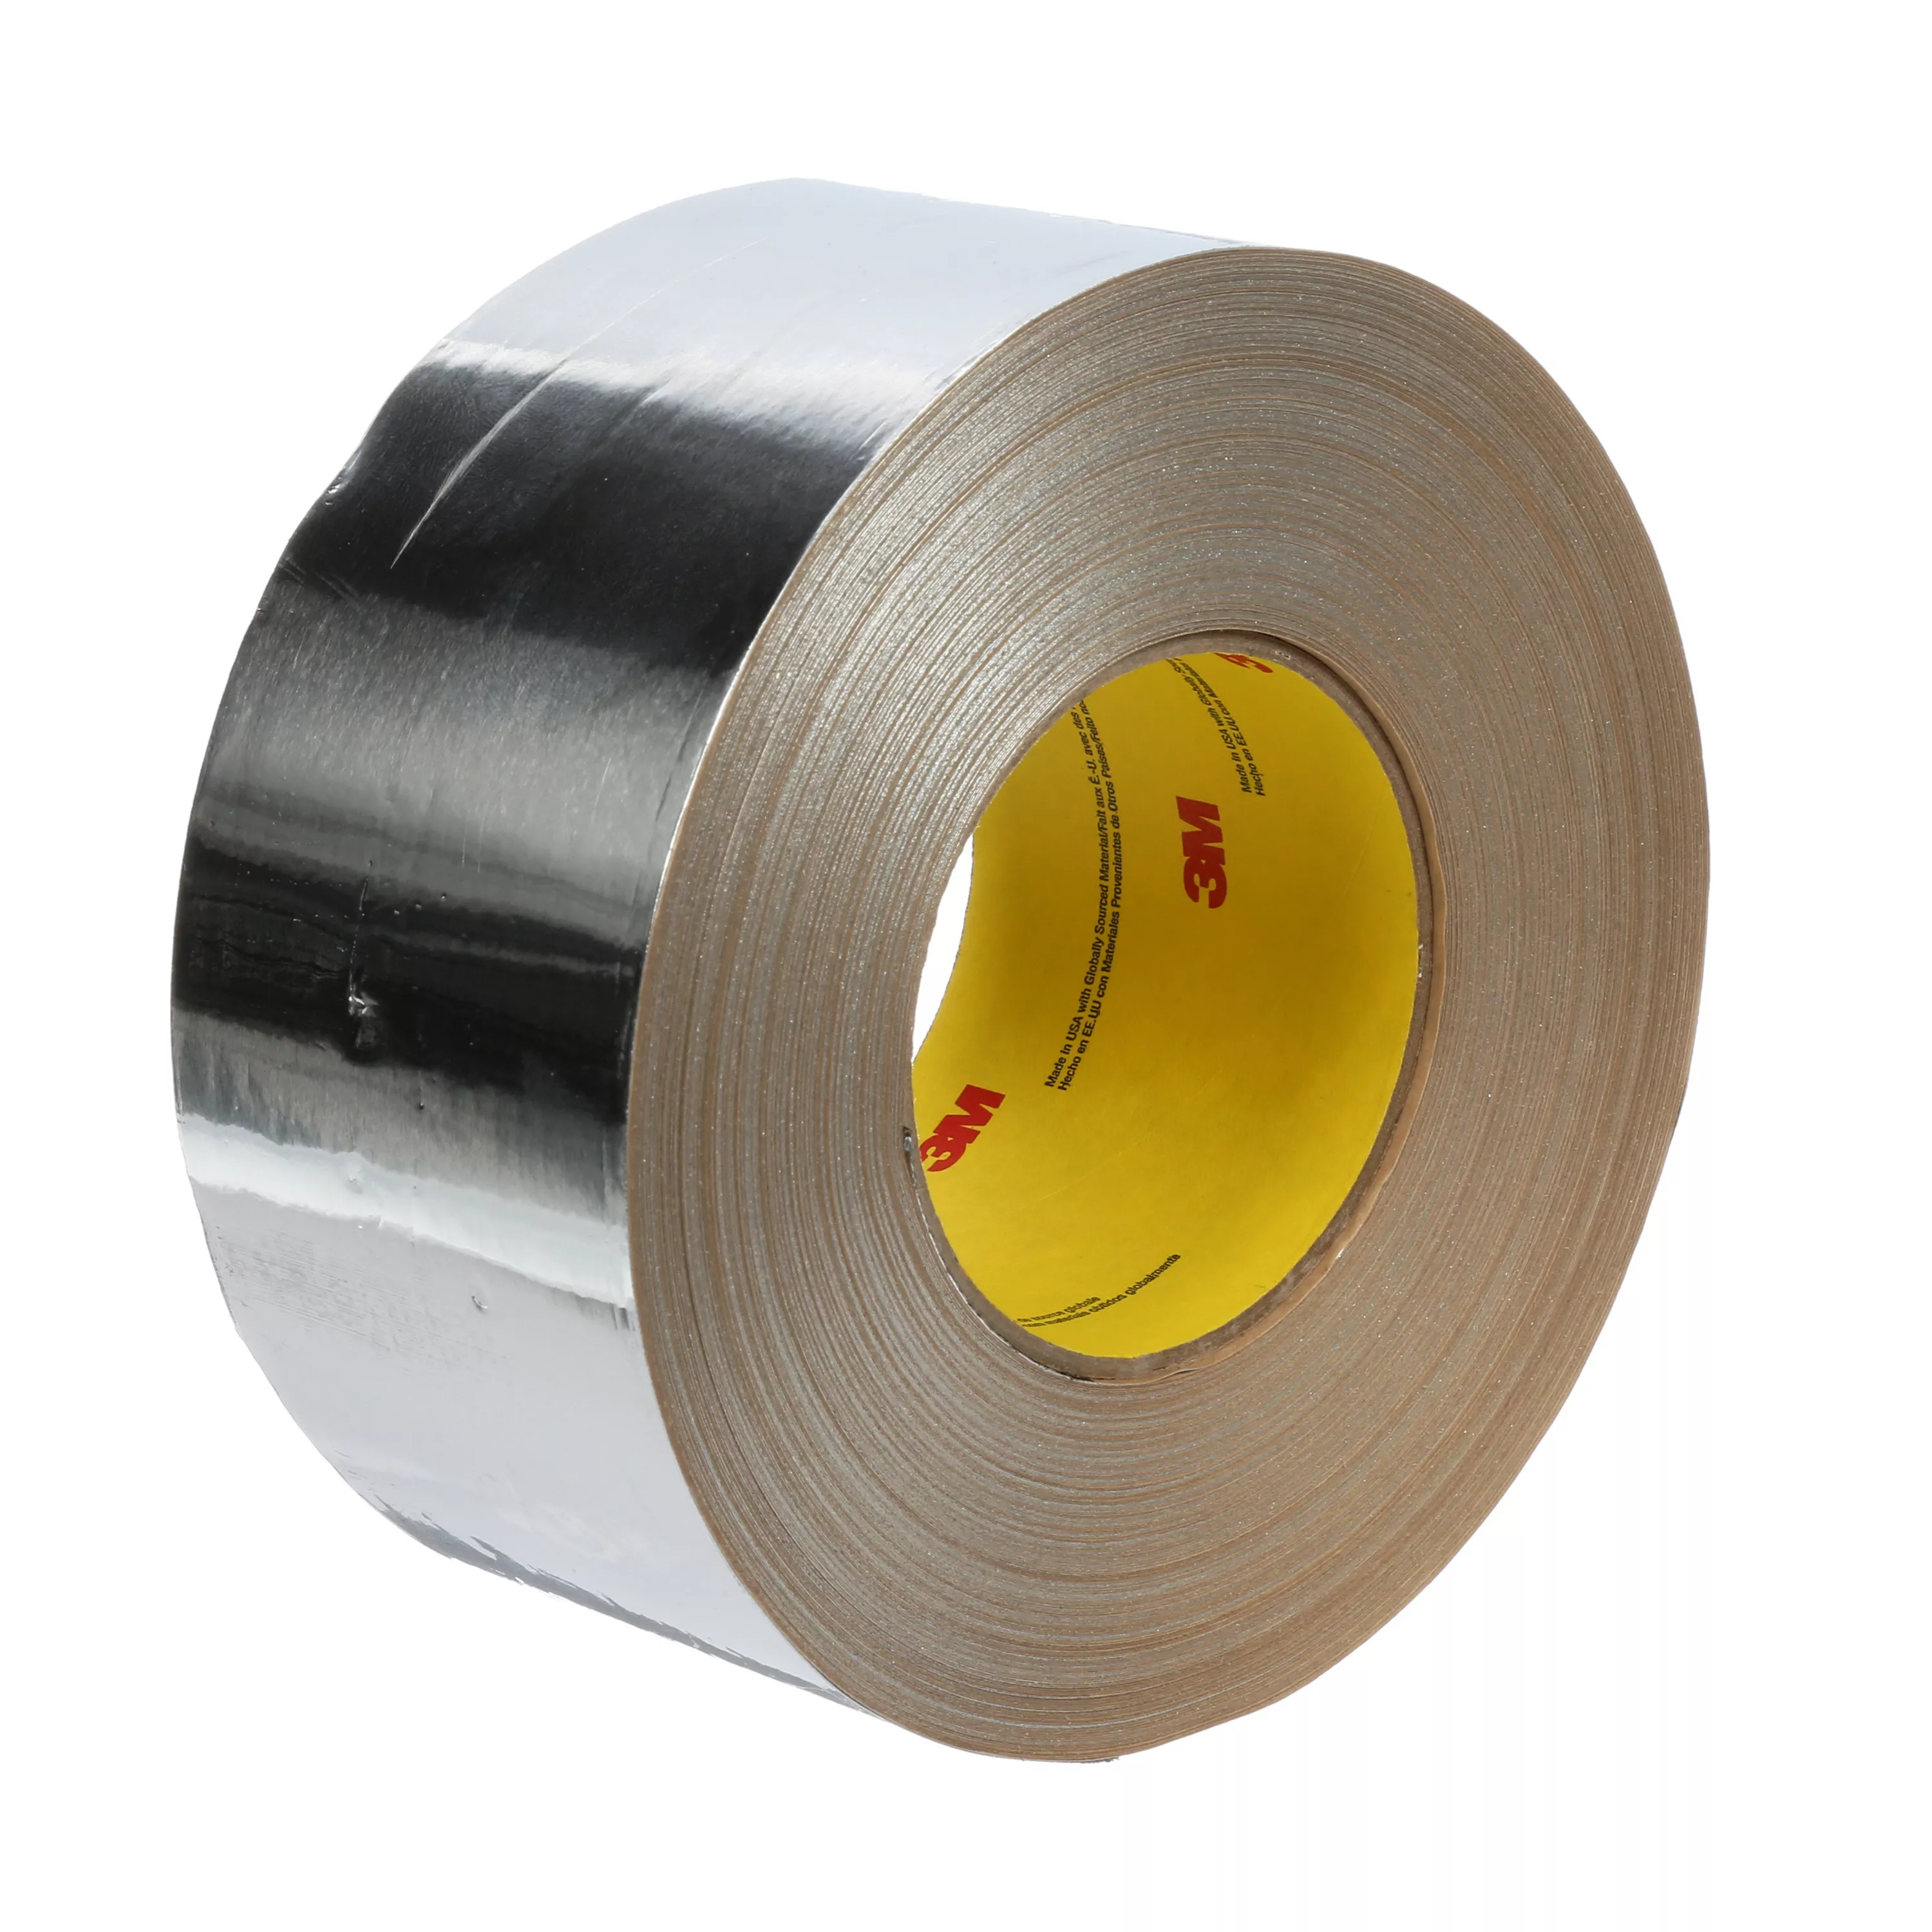 3M™ Venture Tape™ Aluminum Foil Tape 1520CW, Silver, 63.5 mm x 45.7 m,
3.2 mil, 20 Rolls/Case